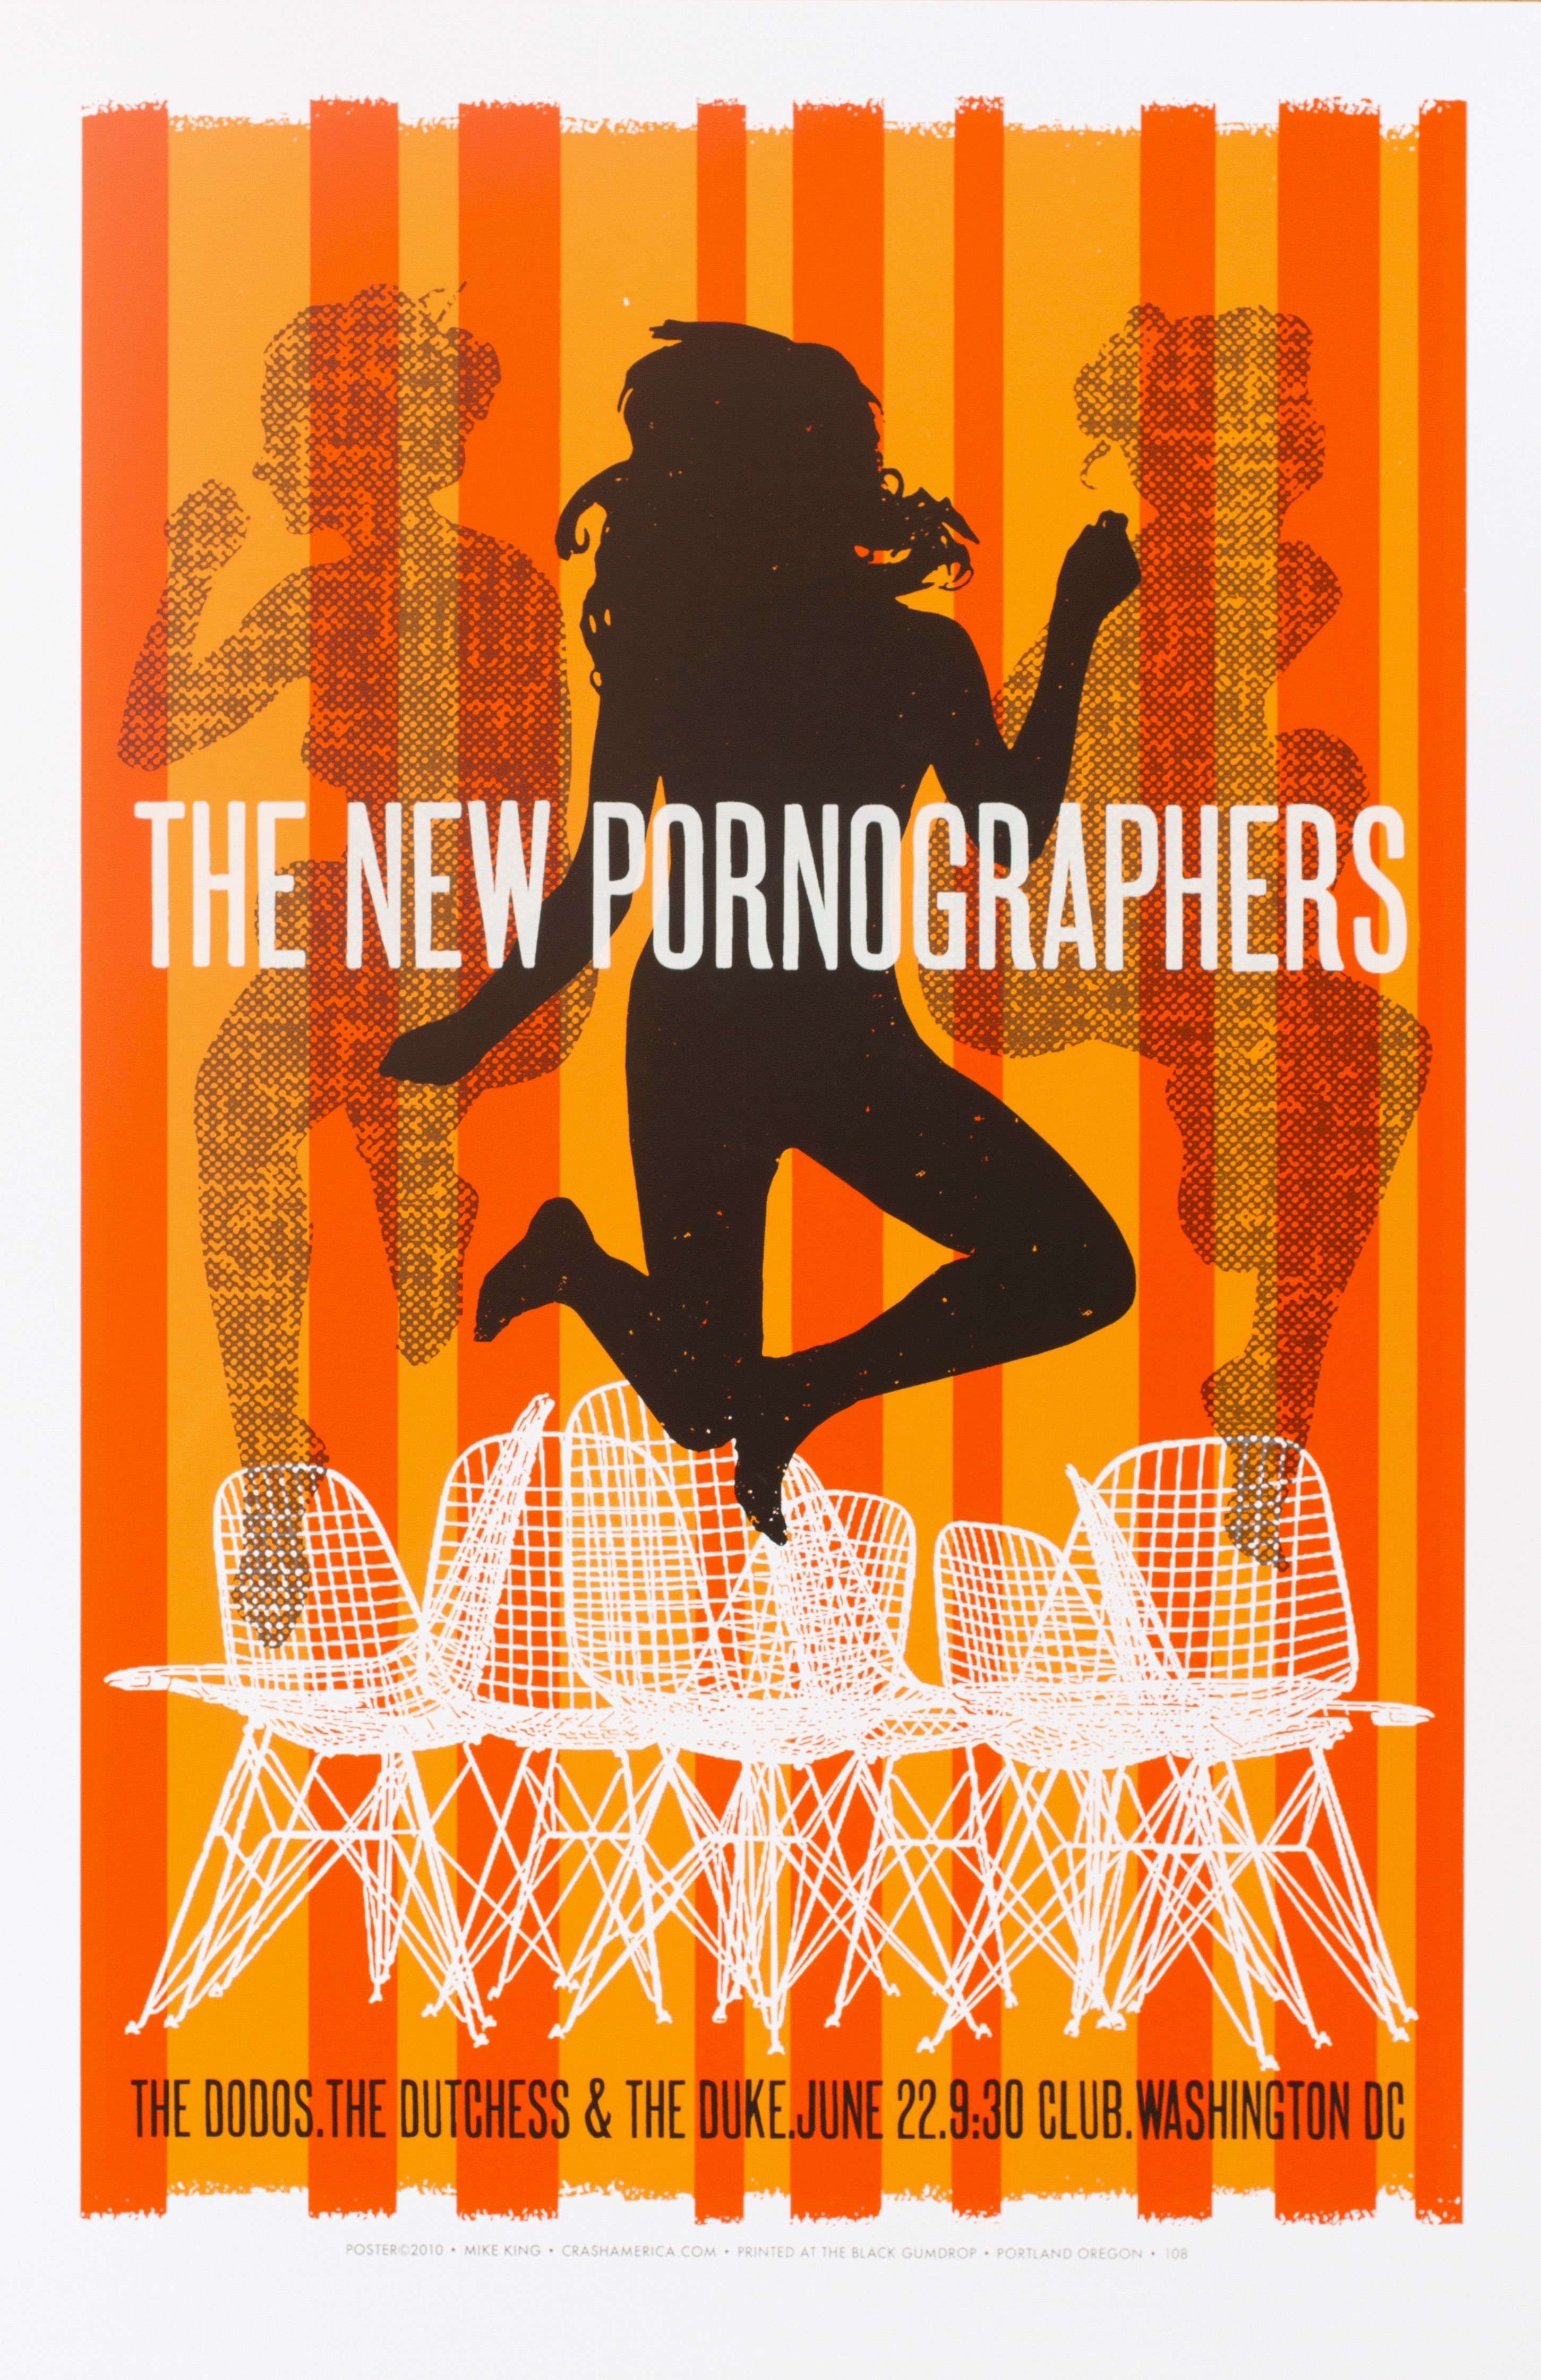 MXP-159.1 New Pornographers 2010 9:30 Club  Jun 22 Concert Poster